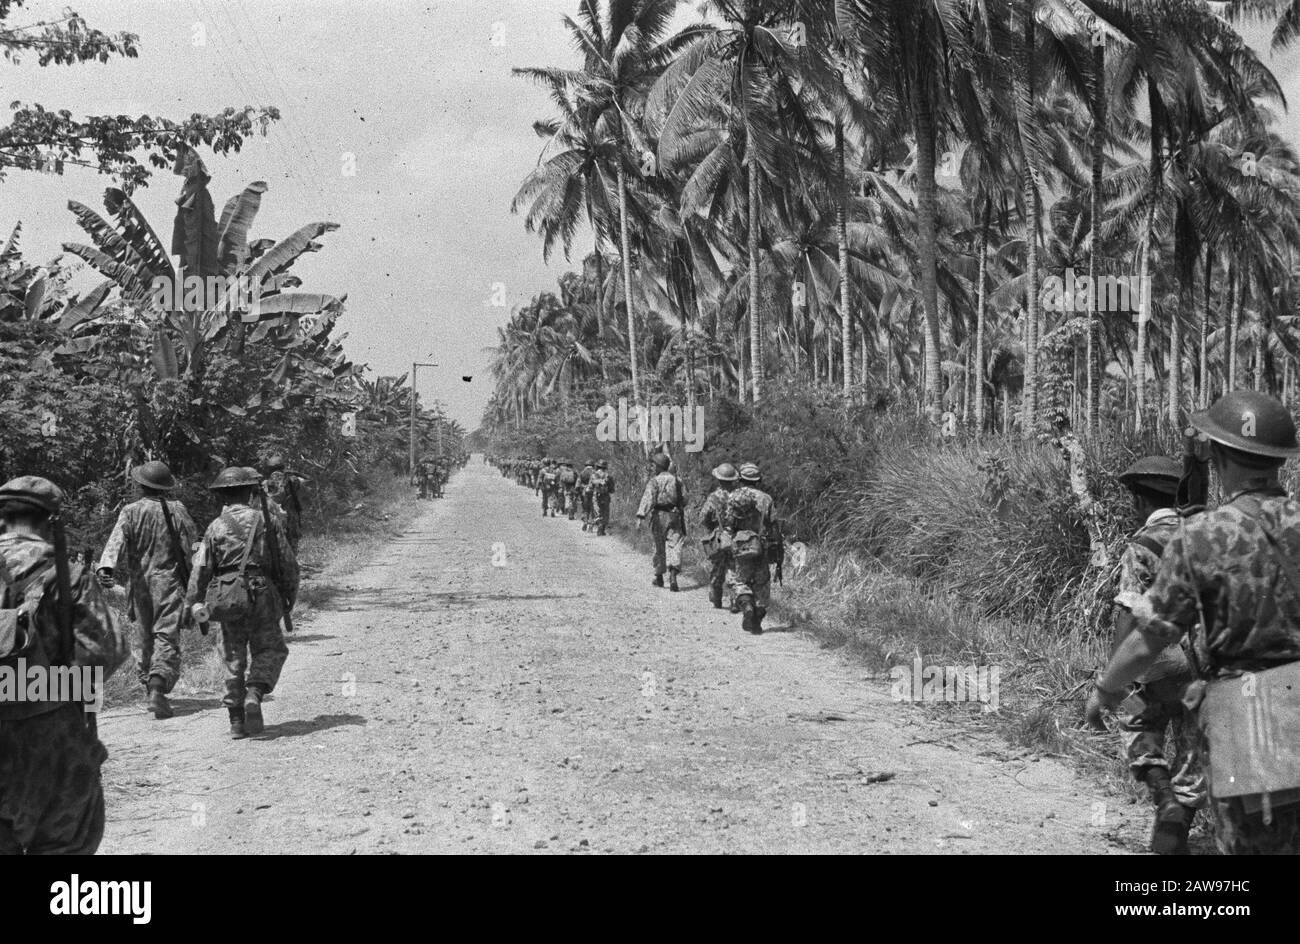 Loeboek Pakem and Baoengan  snatch Dutch infantrymen along a road through a palm oil plantation Date: July 29, 1948 Location: Indonesia, Dutch East Indies, Sumatra Stock Photo